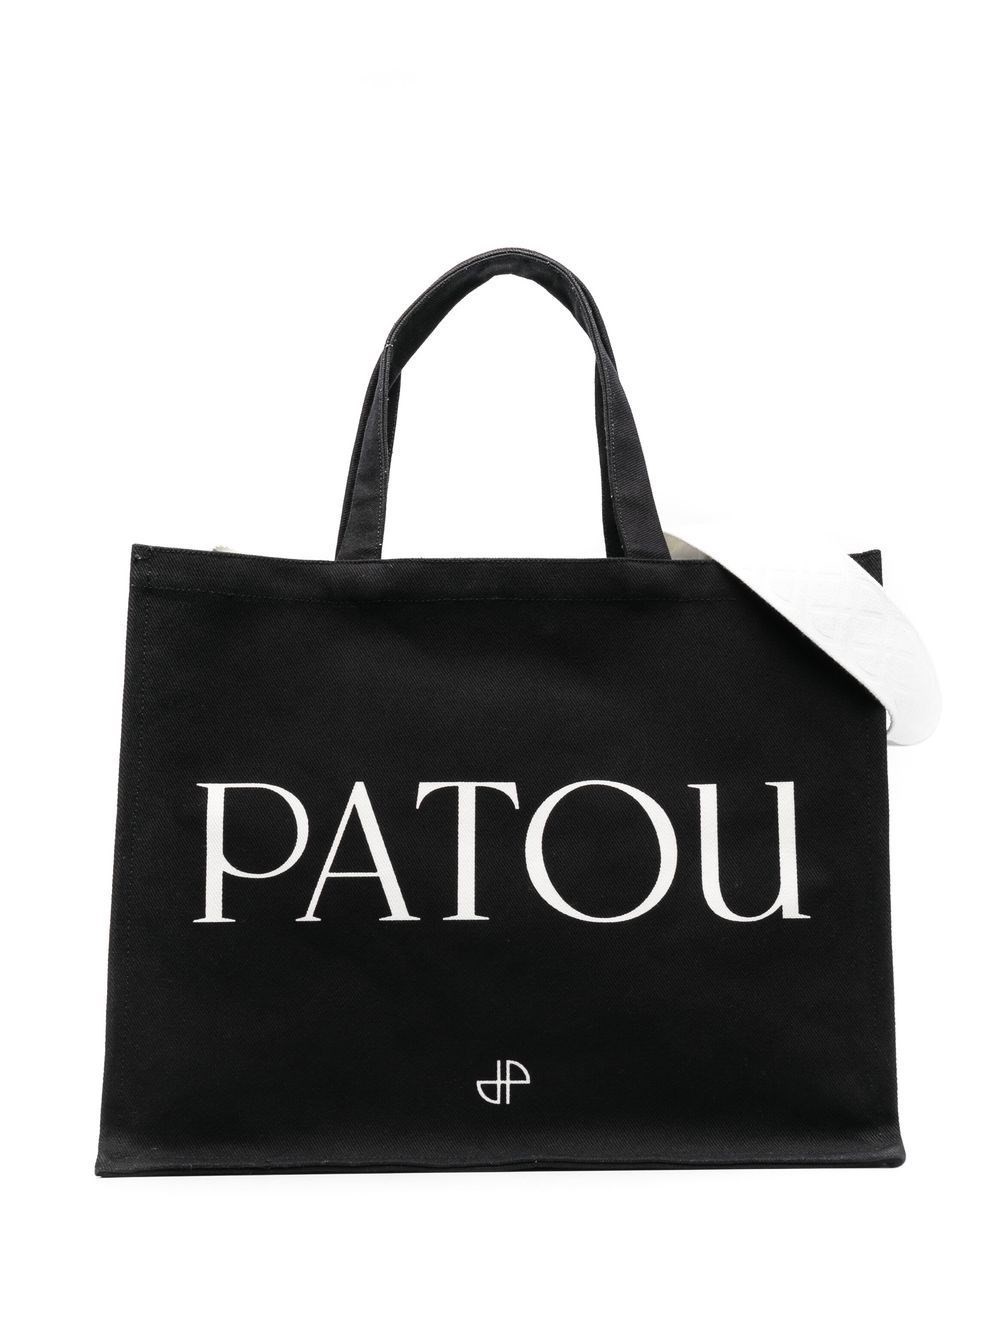 PATOU TOTE BAG WITH PRINT